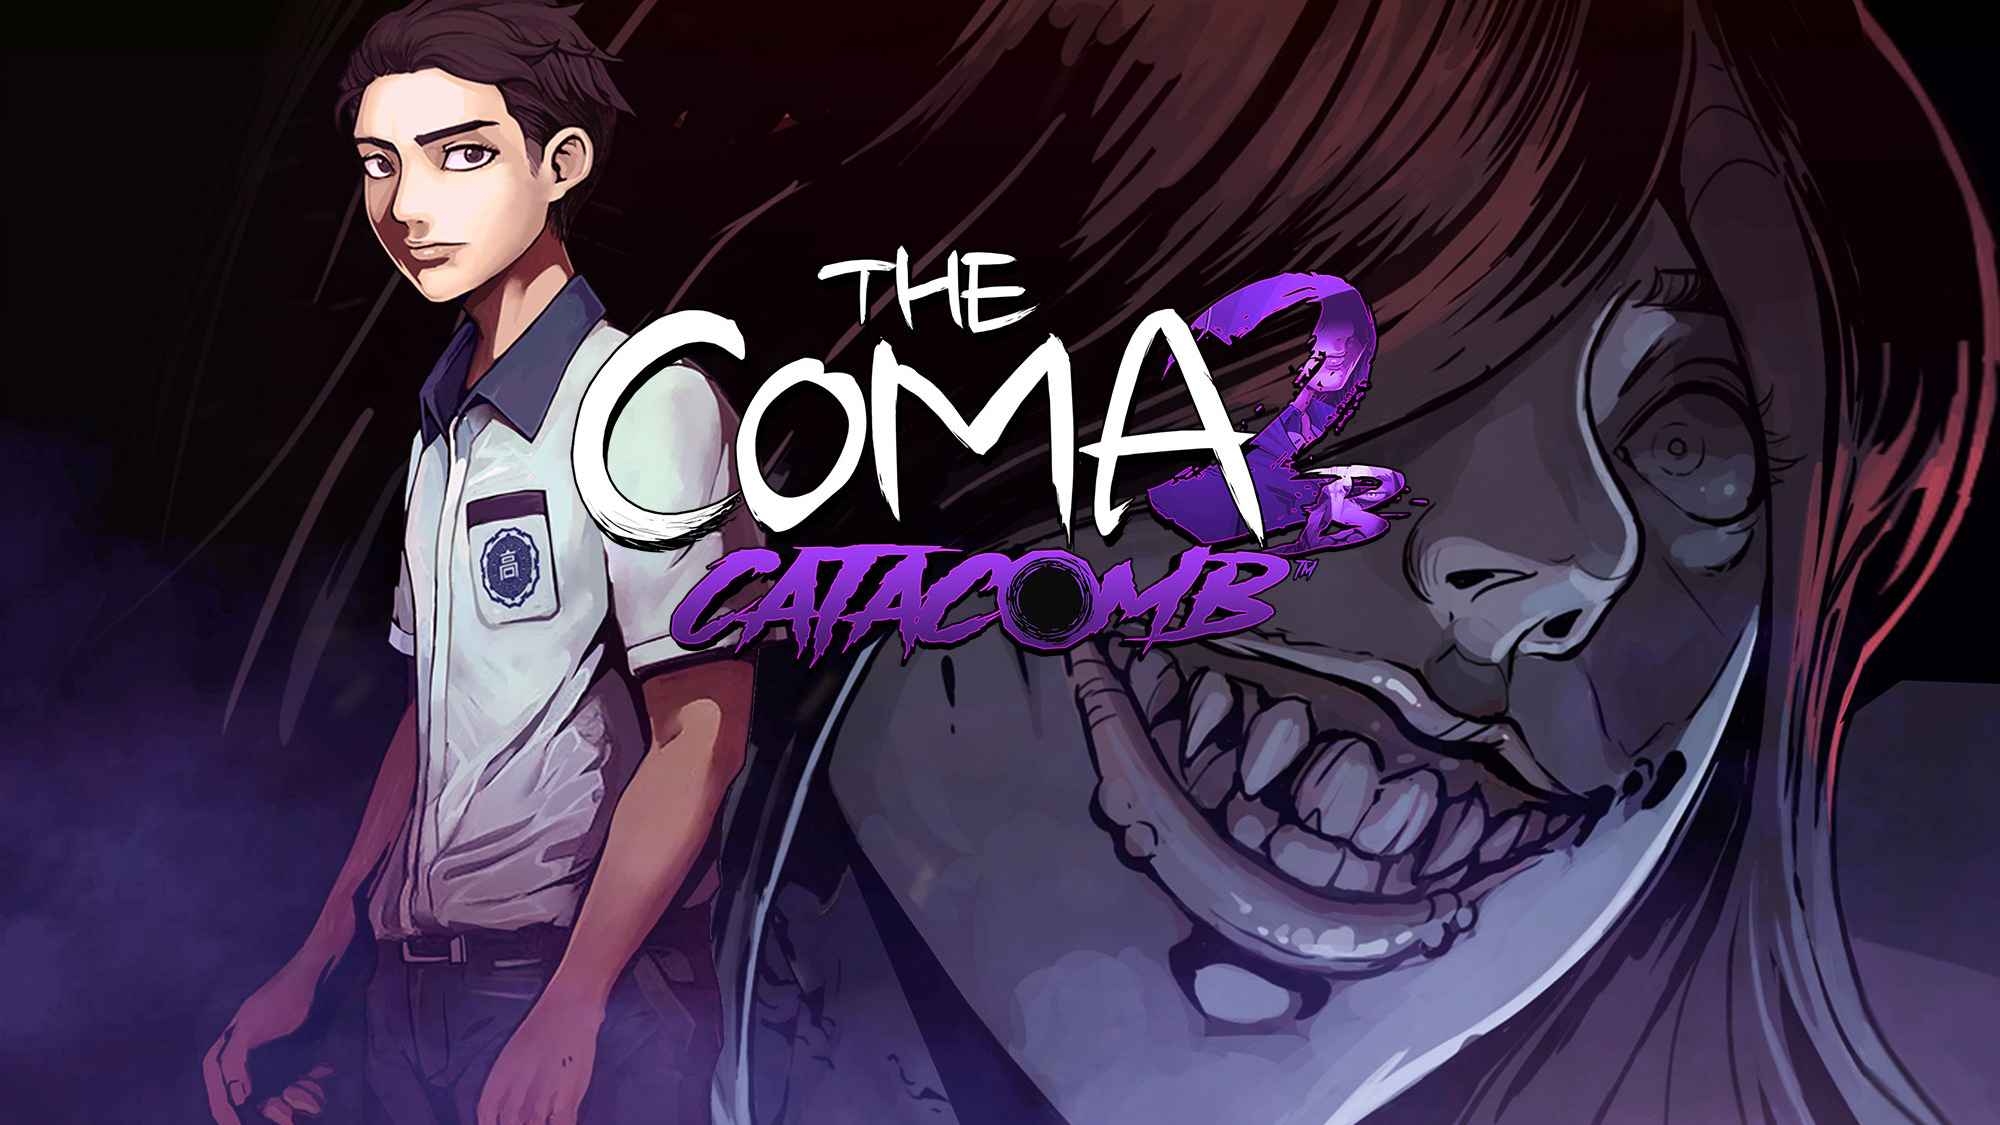 Headup Publishes The Coma 2B: Catacomb From Dvora Studio